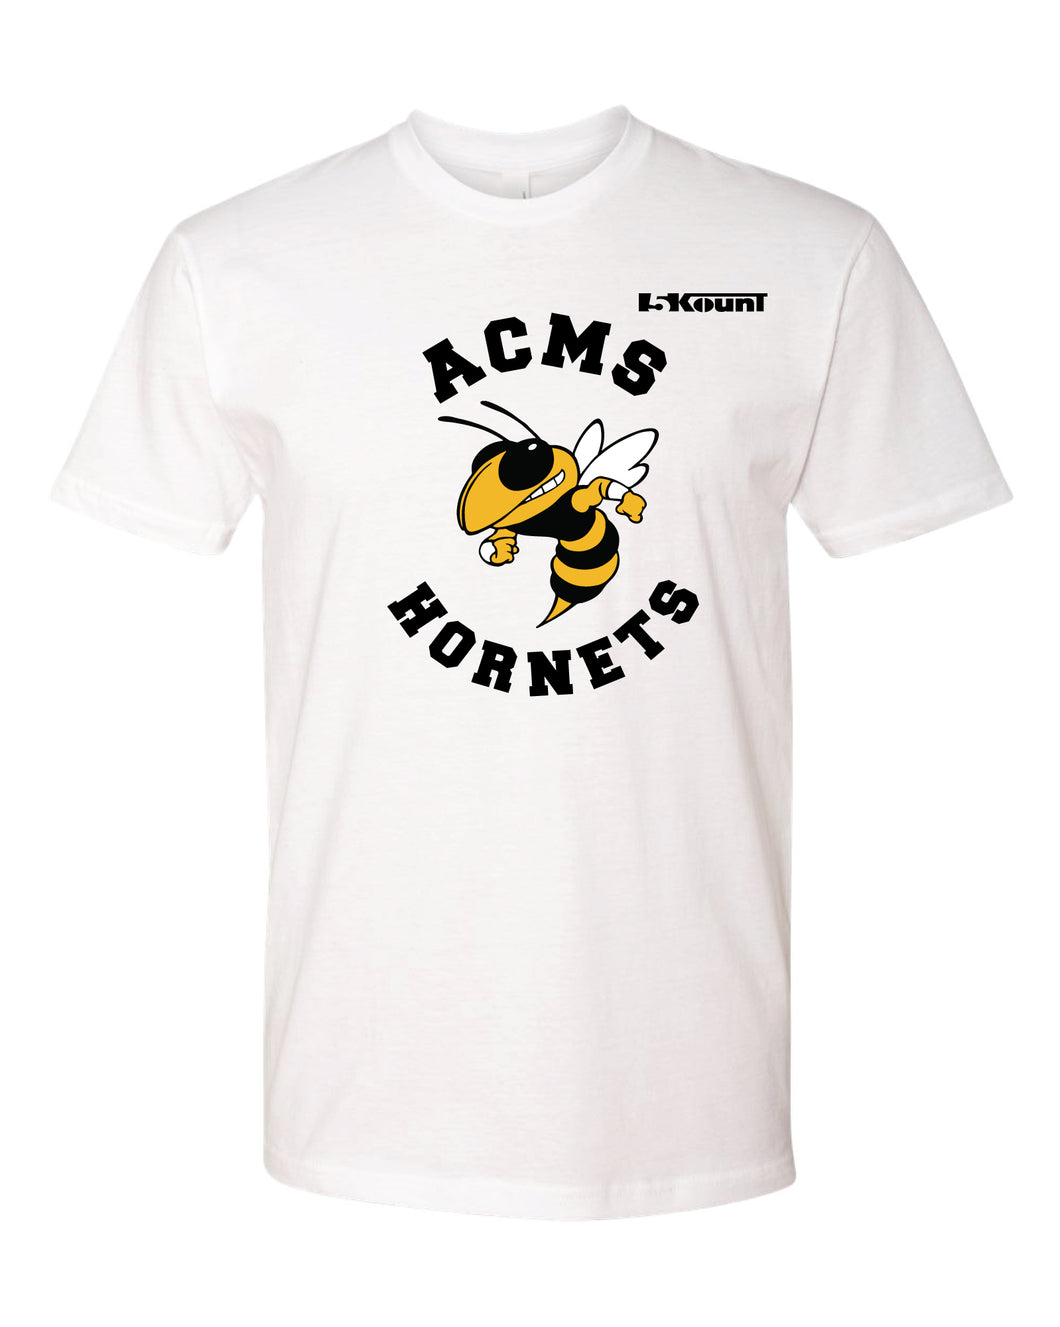 Anne Chesnutt Hornets DryFit Performance Tee - White (Does Not Meet School Uniform Requirements) - 5KounT2018